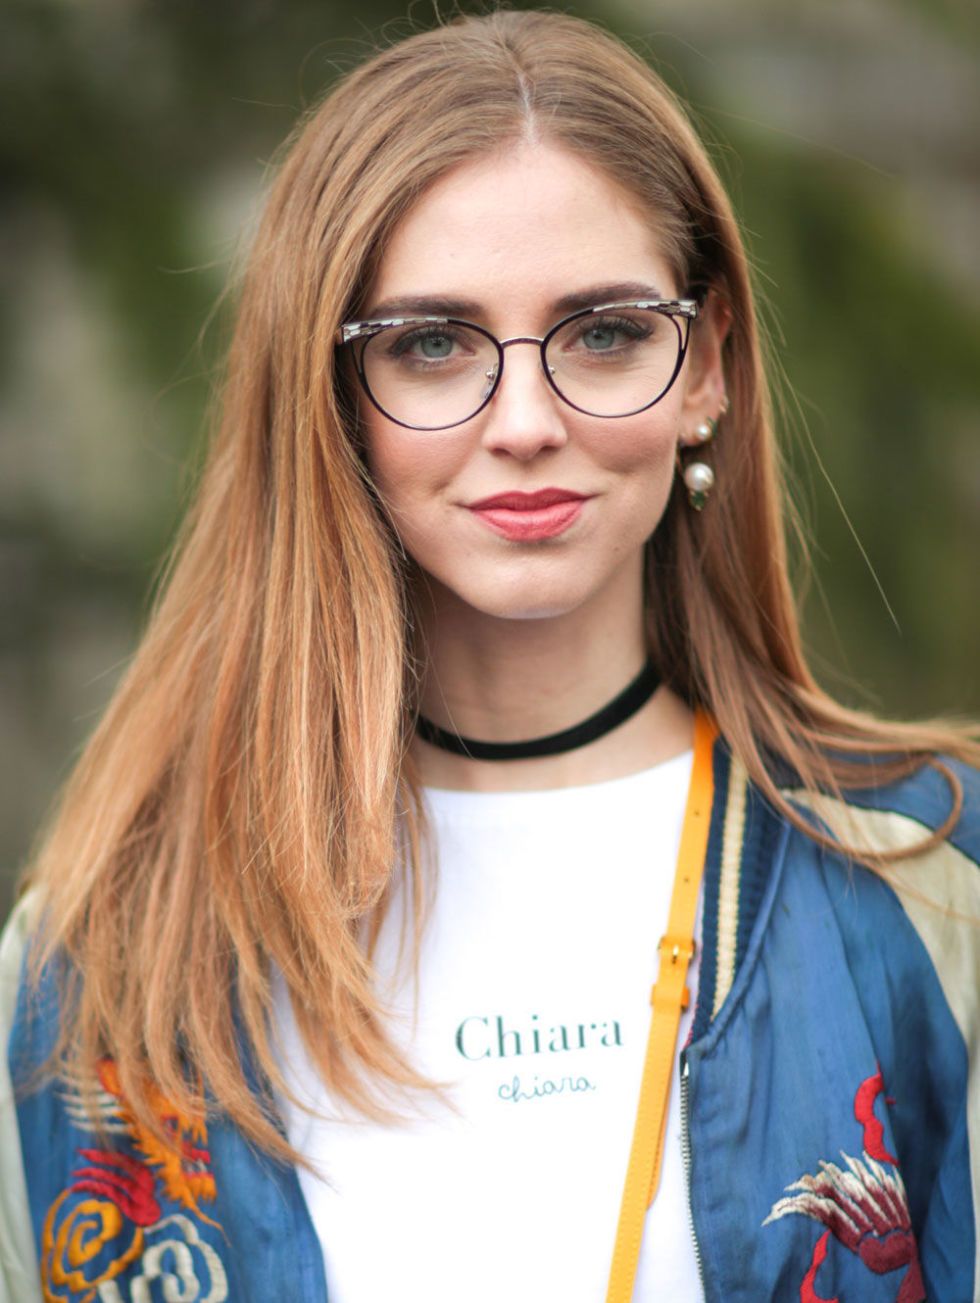 <p>Blogger en ondernemer Chiara Ferragni.</p>